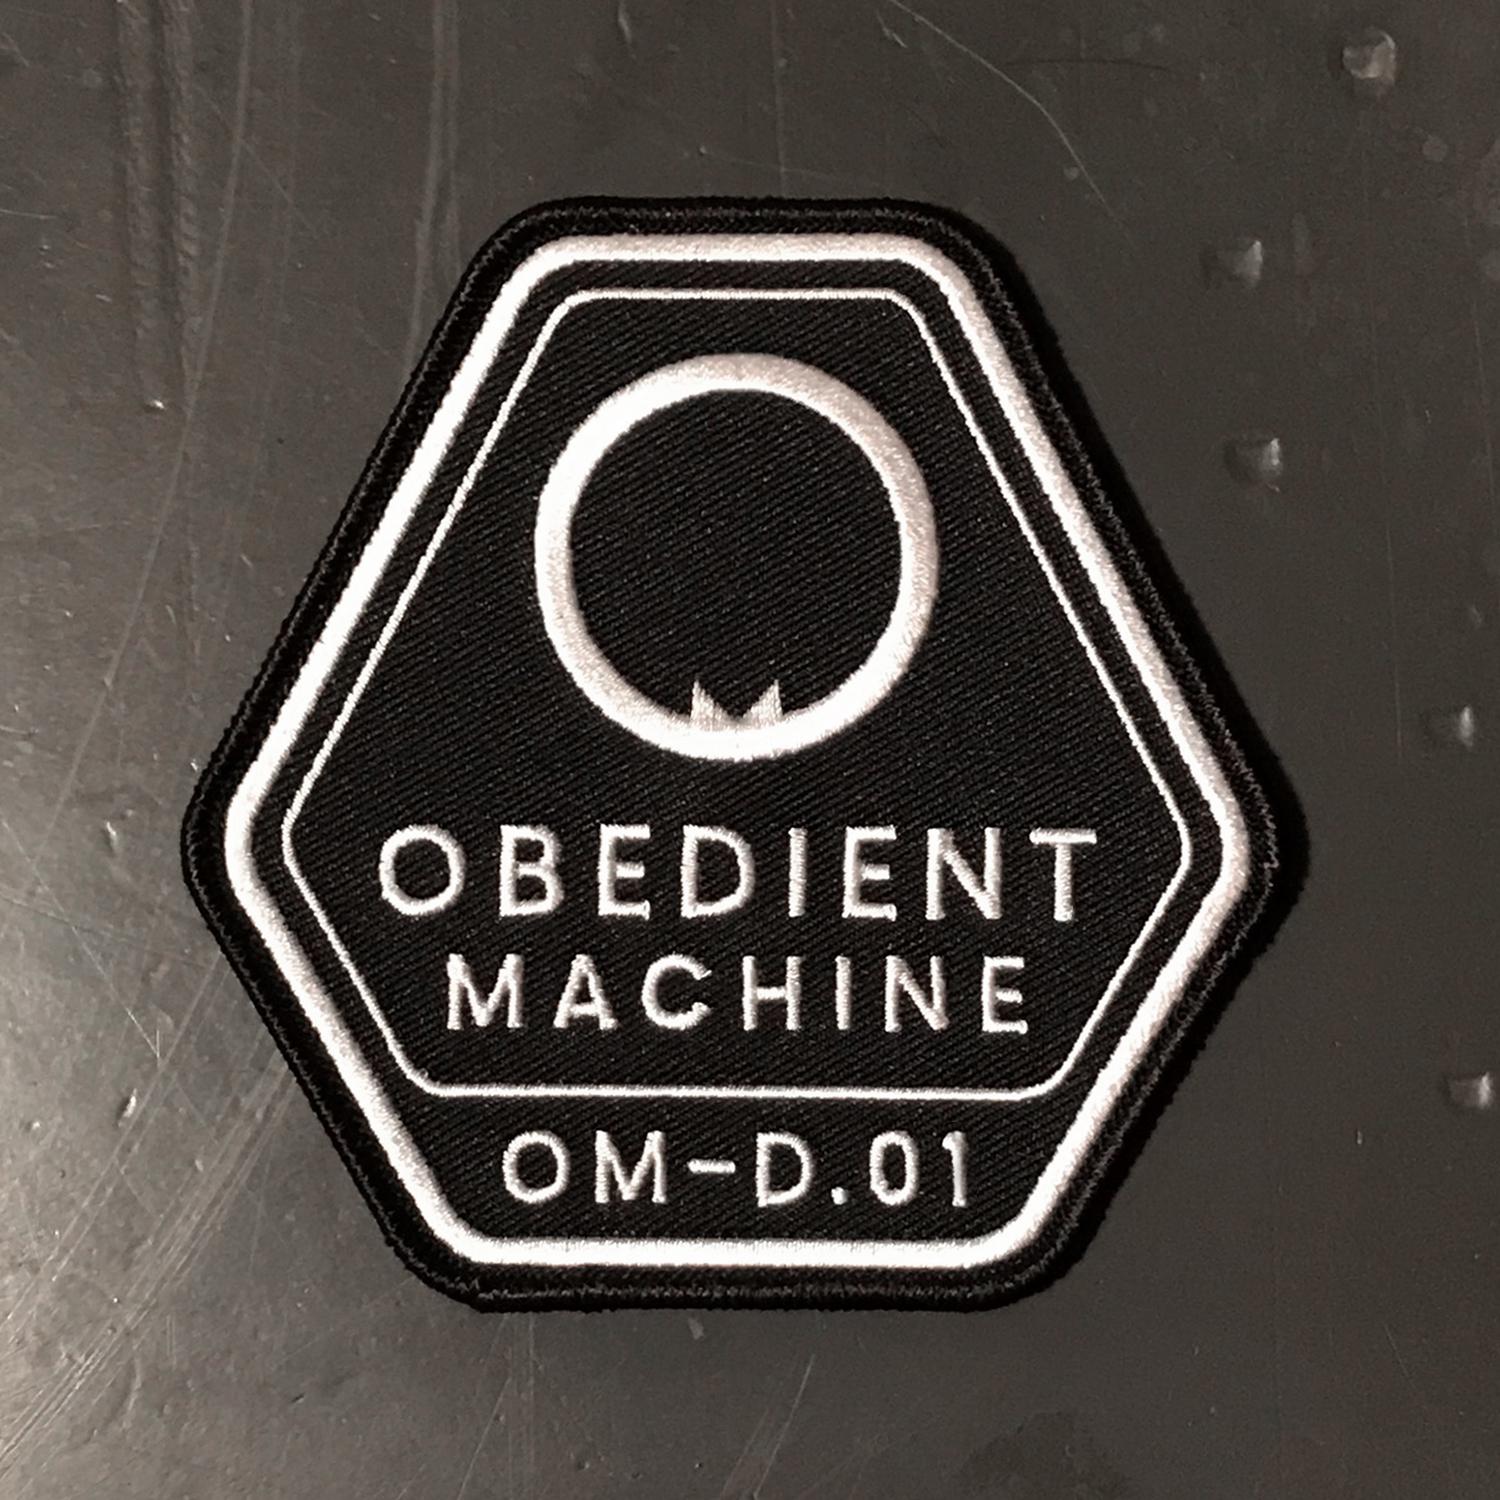 om-d01-patch